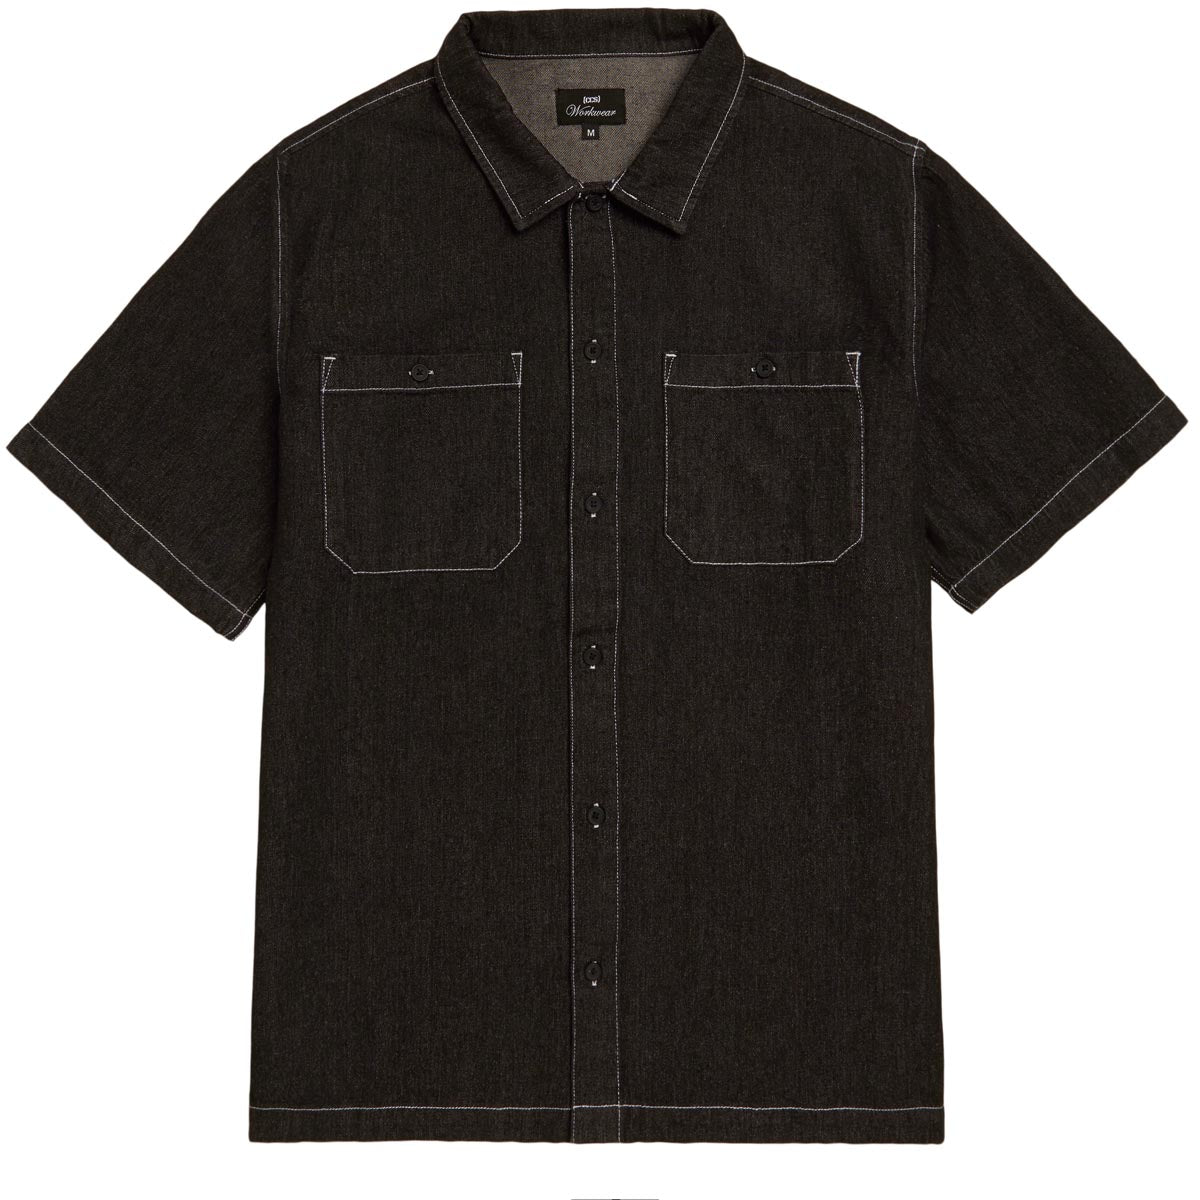 CCS Heavy Denim Work Shirt - Black image 1